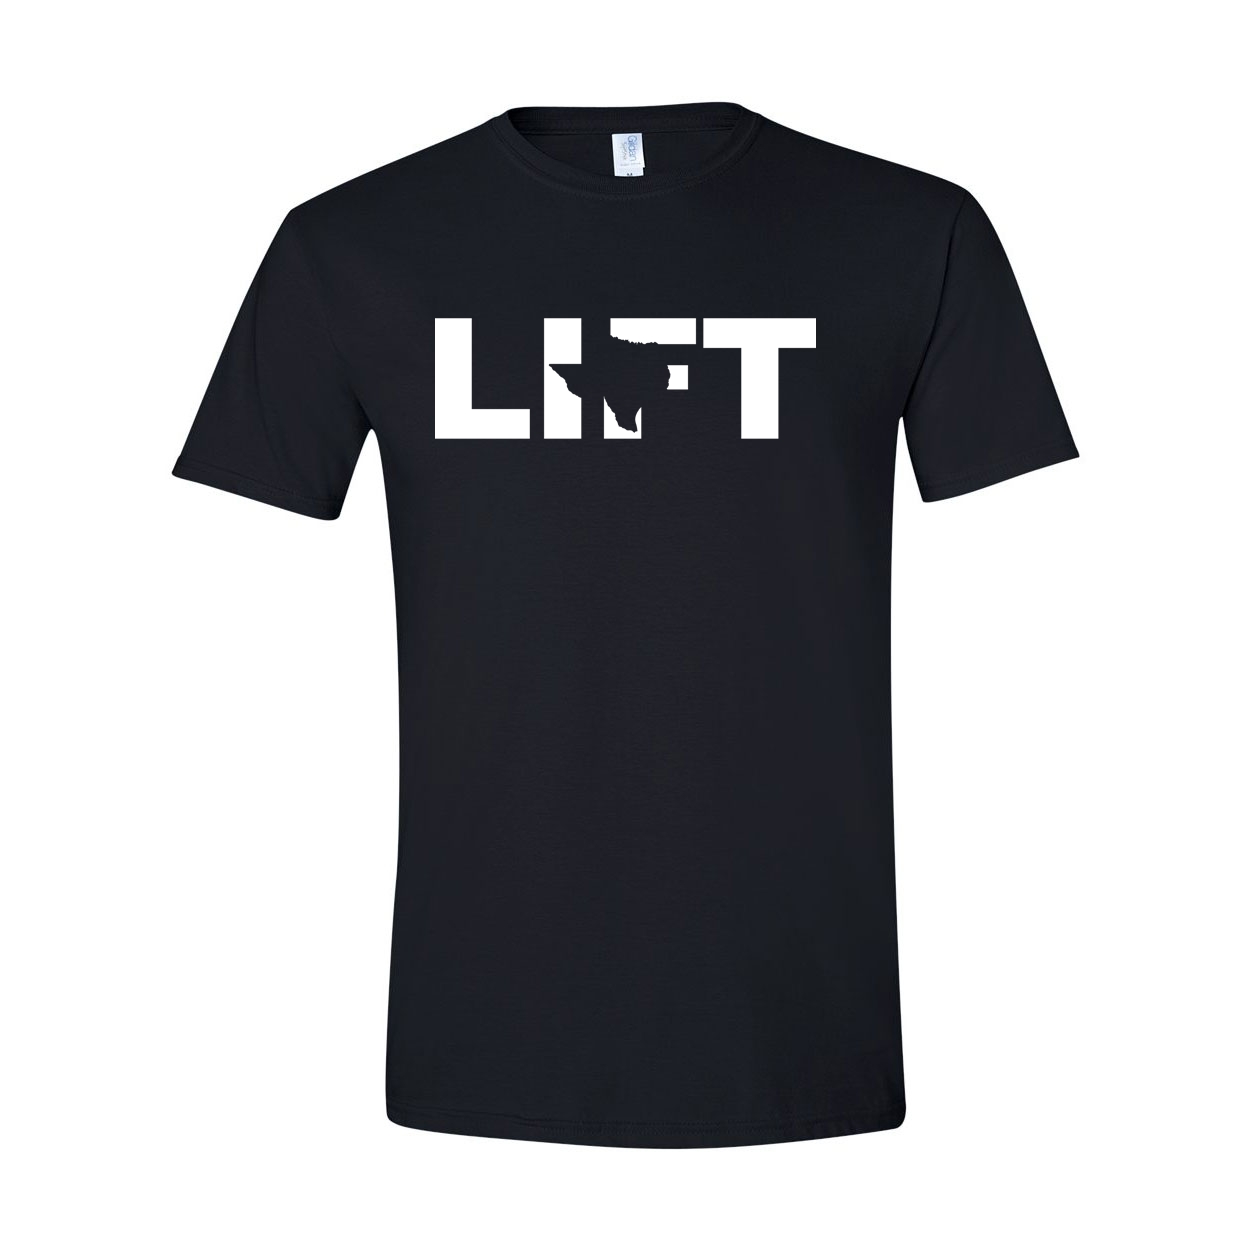 Lift Texas Classic T-Shirt Black (White Logo)